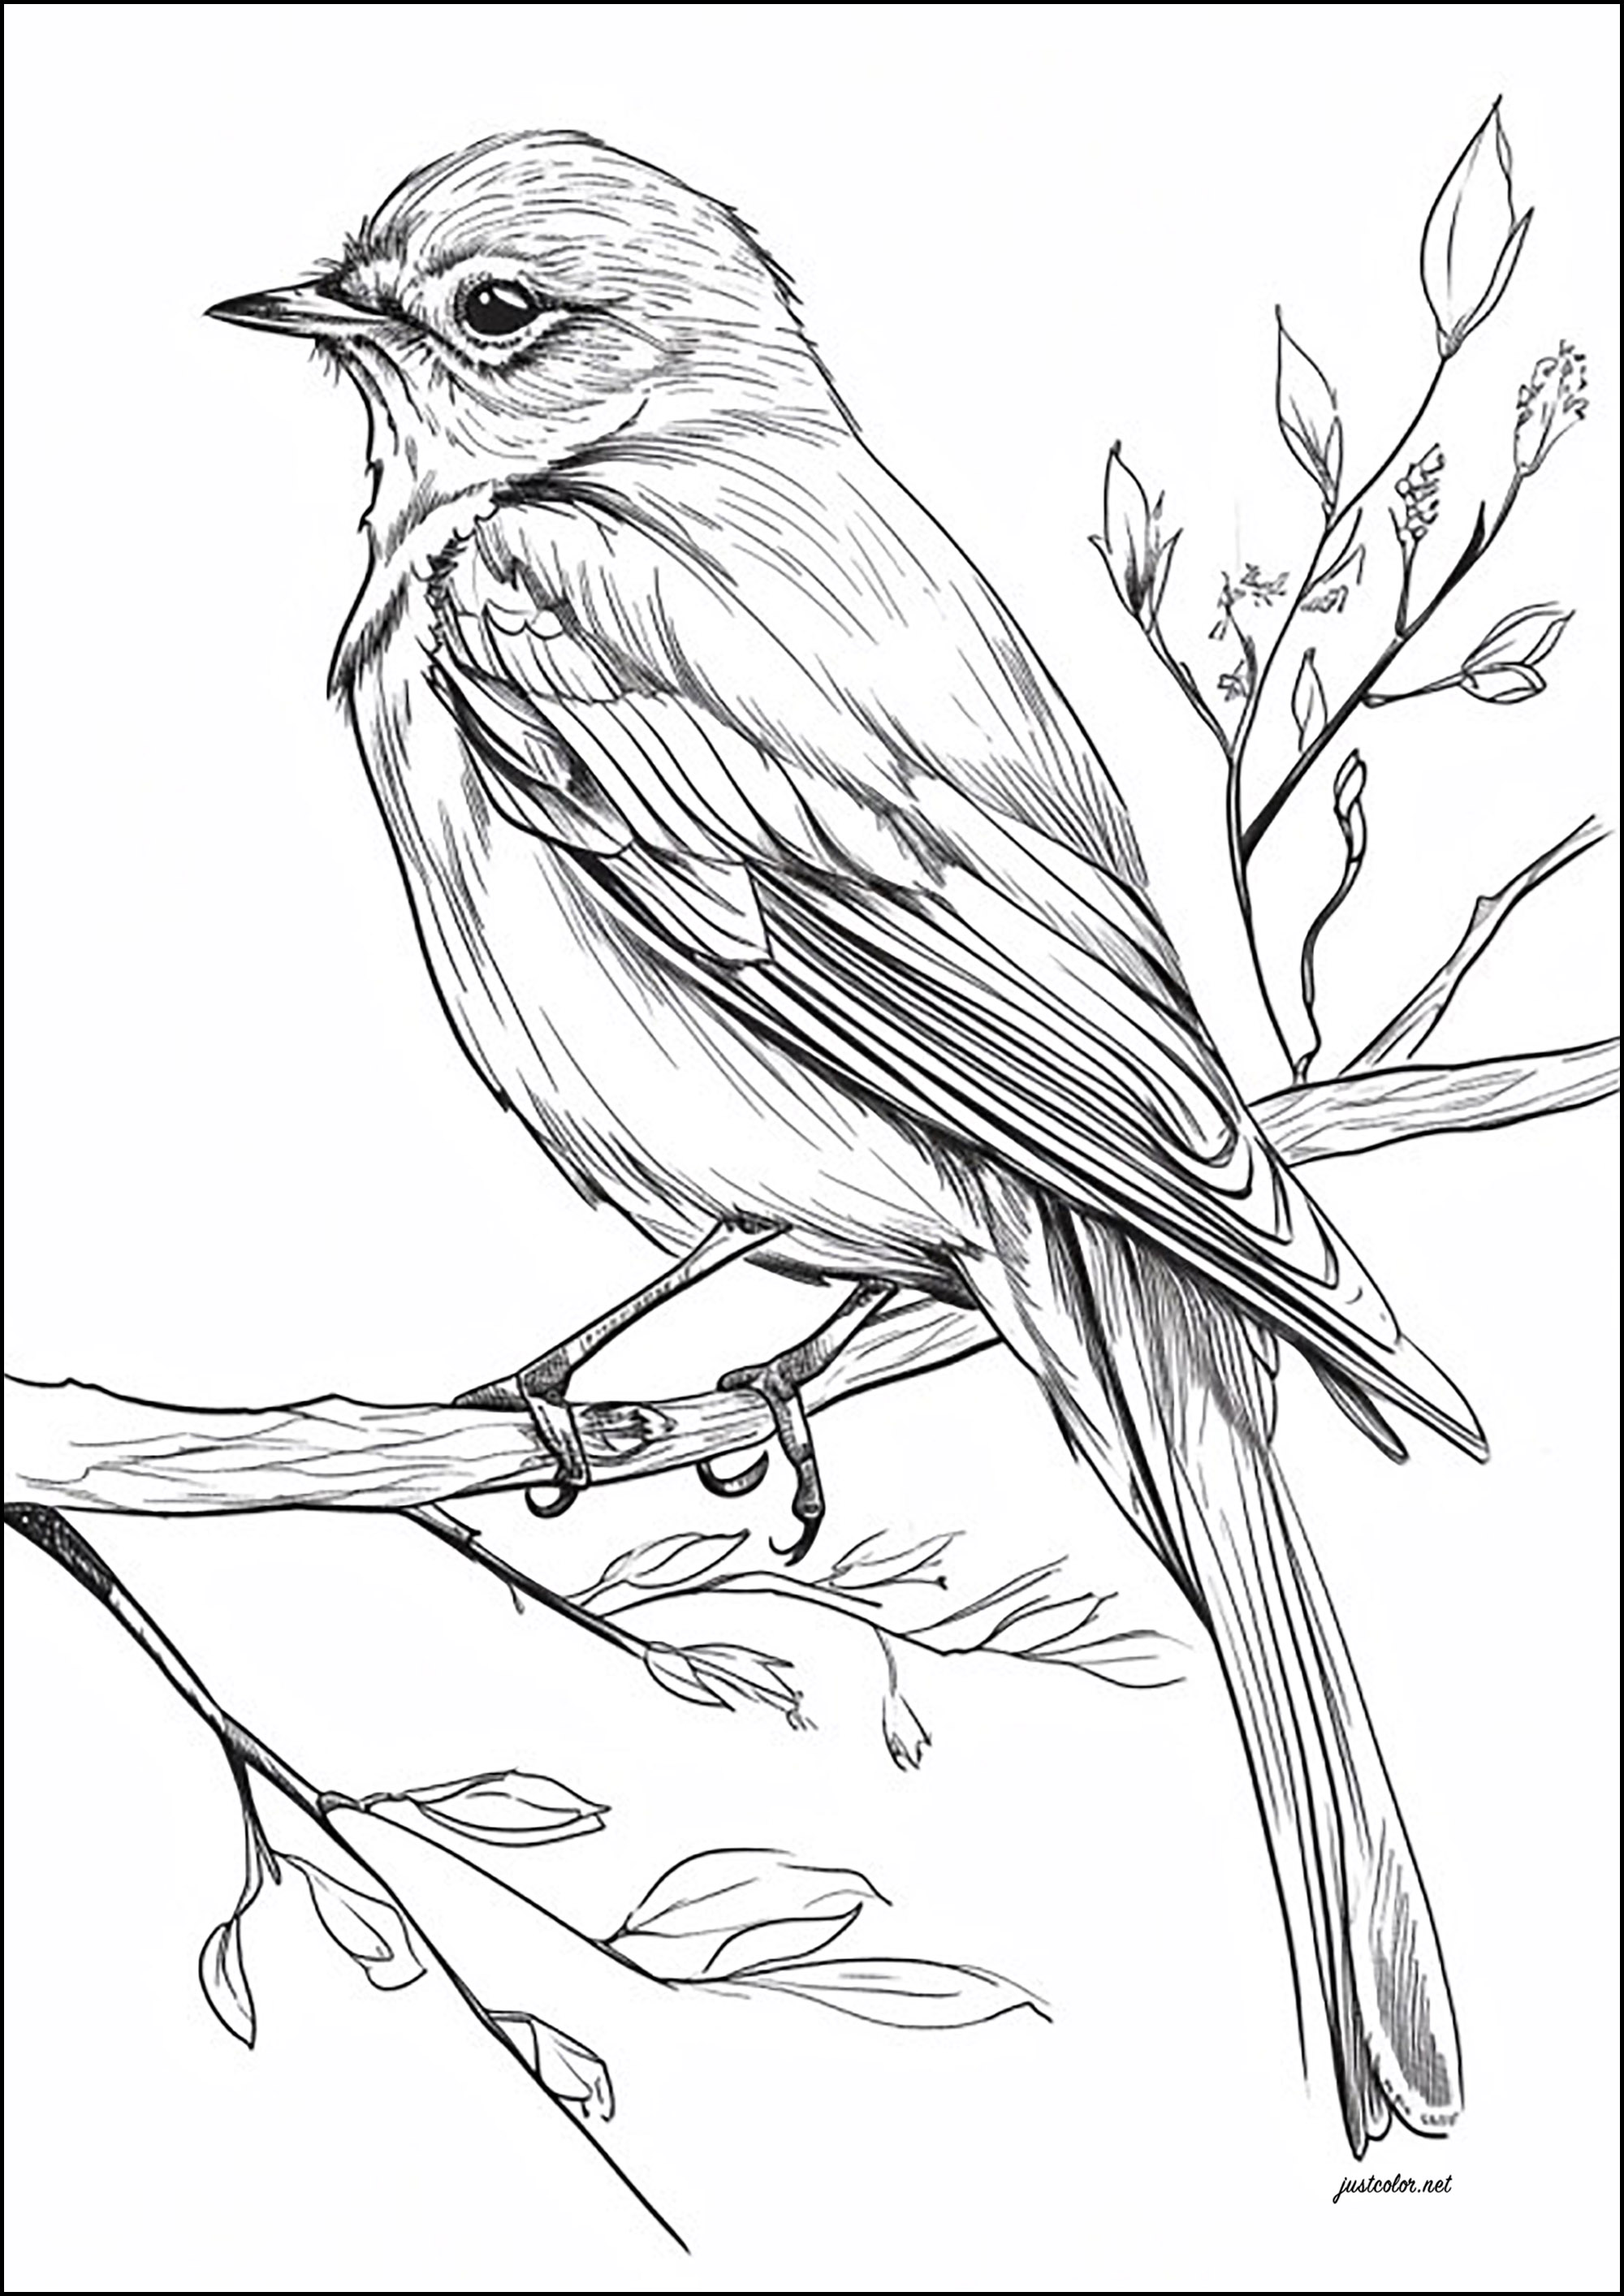 File:Black and white line art drawing of swainson hawk bird in flight.jpg -  Wikimedia Commons